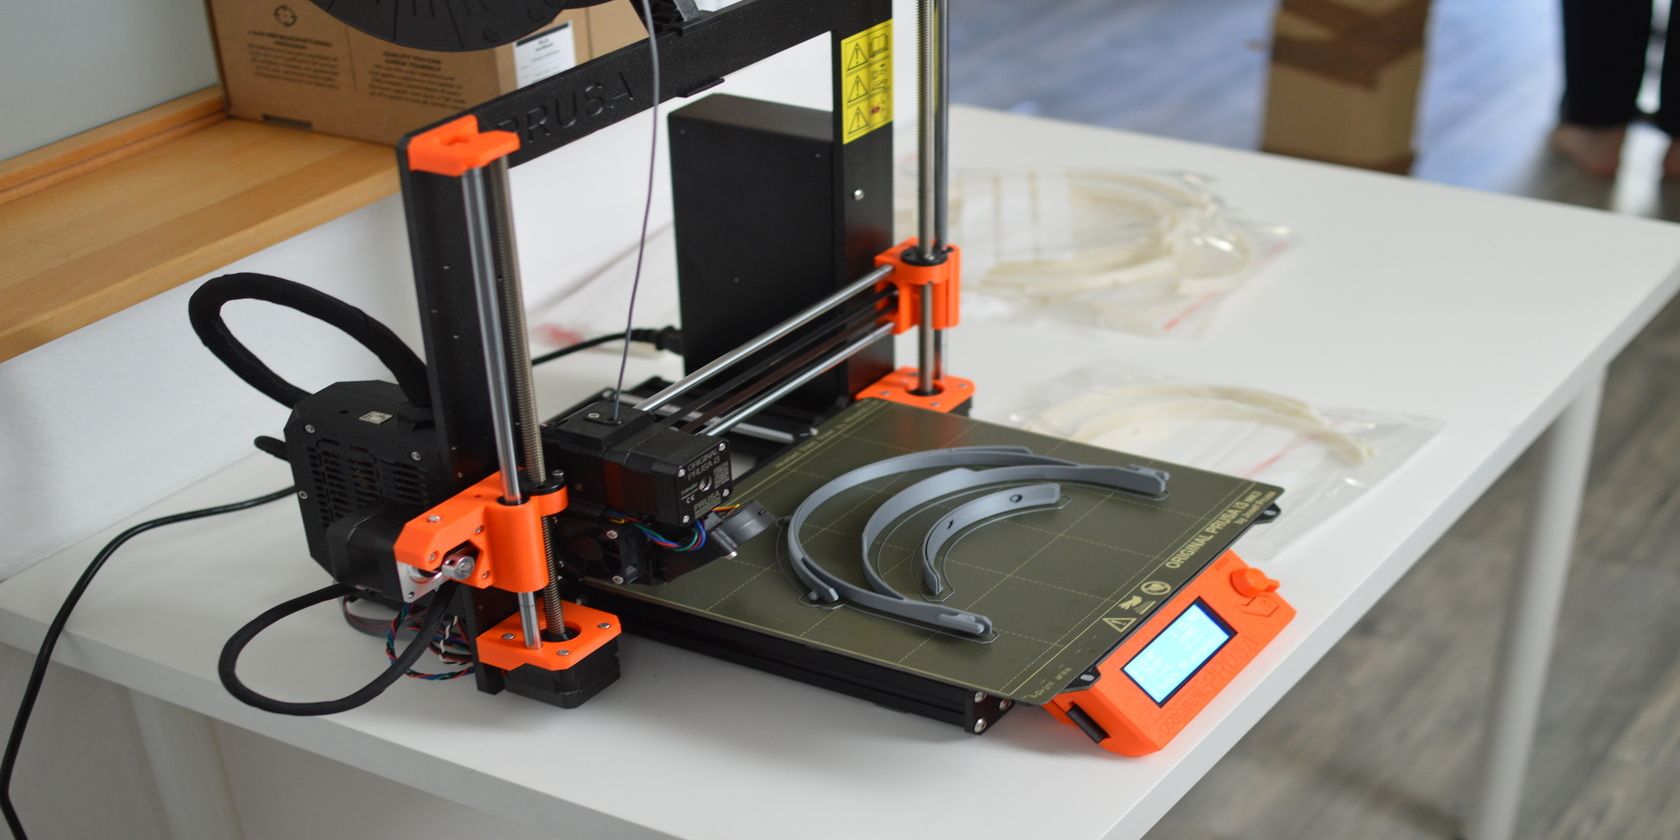 3D Printer sitting on table